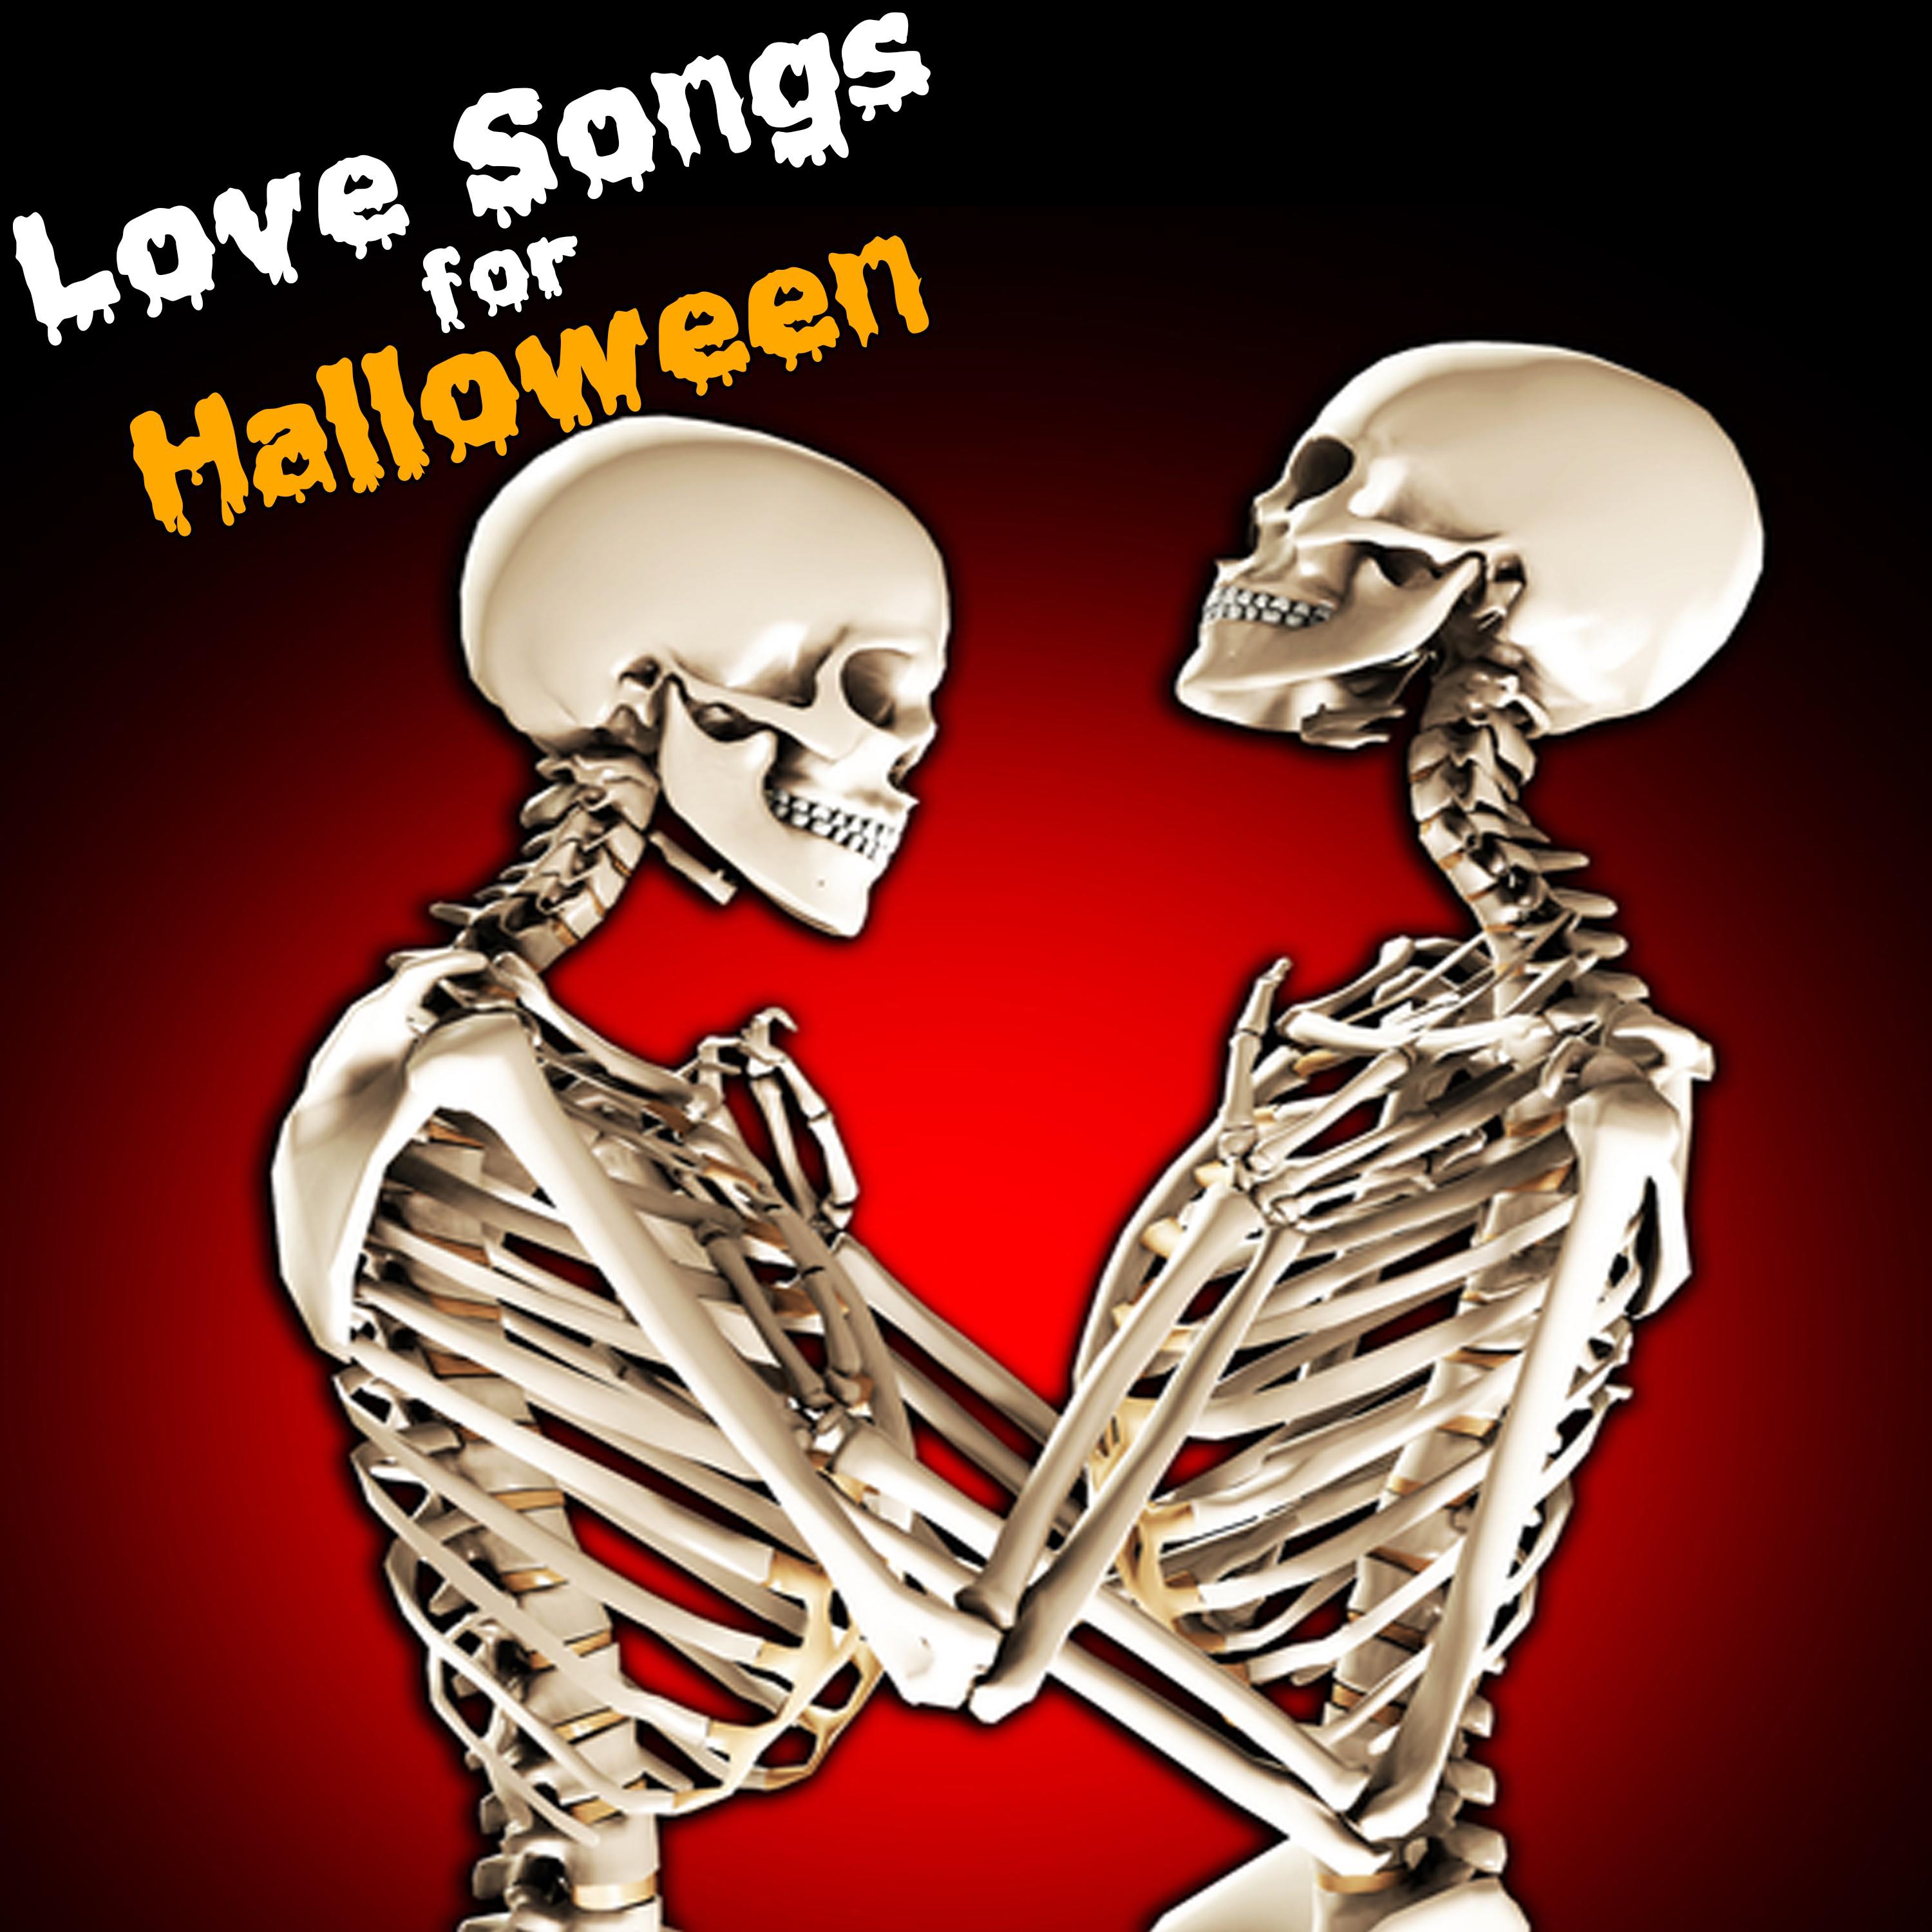 Love Songs for Halloween